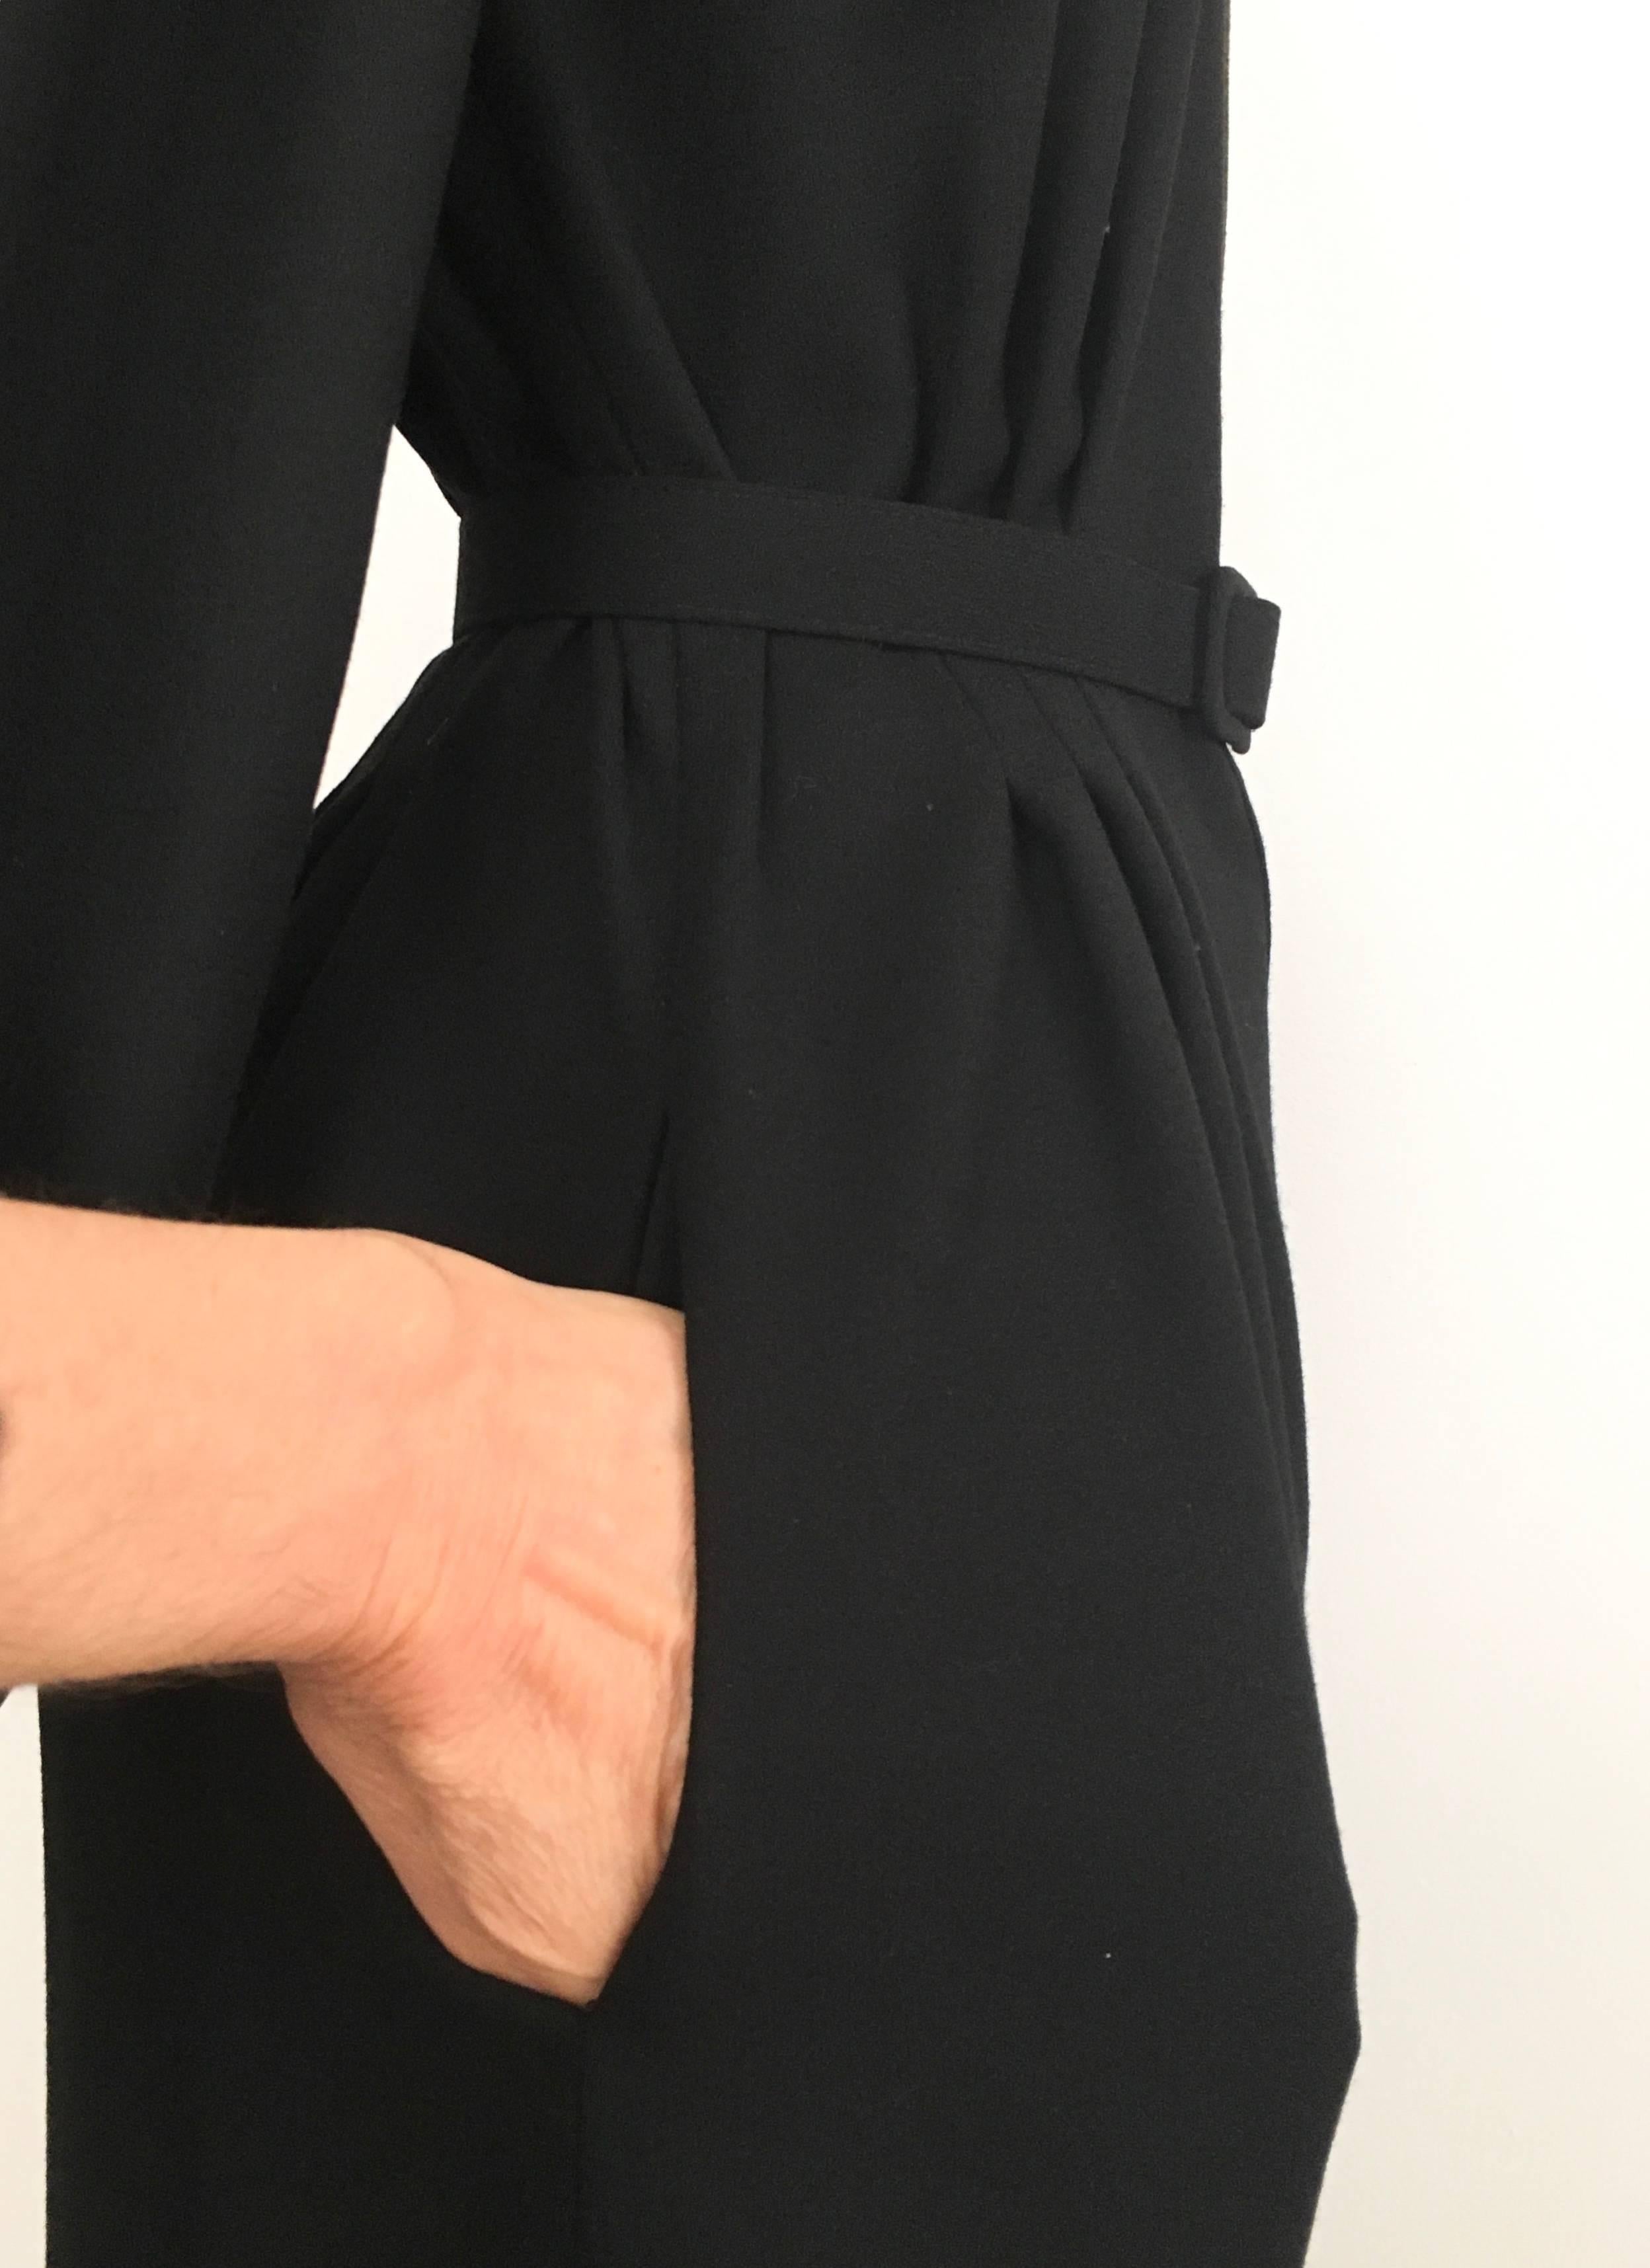 Women's or Men's Pierre Cardin 1980s Black Wool Button Up Dress with Pockets Size 6/8.